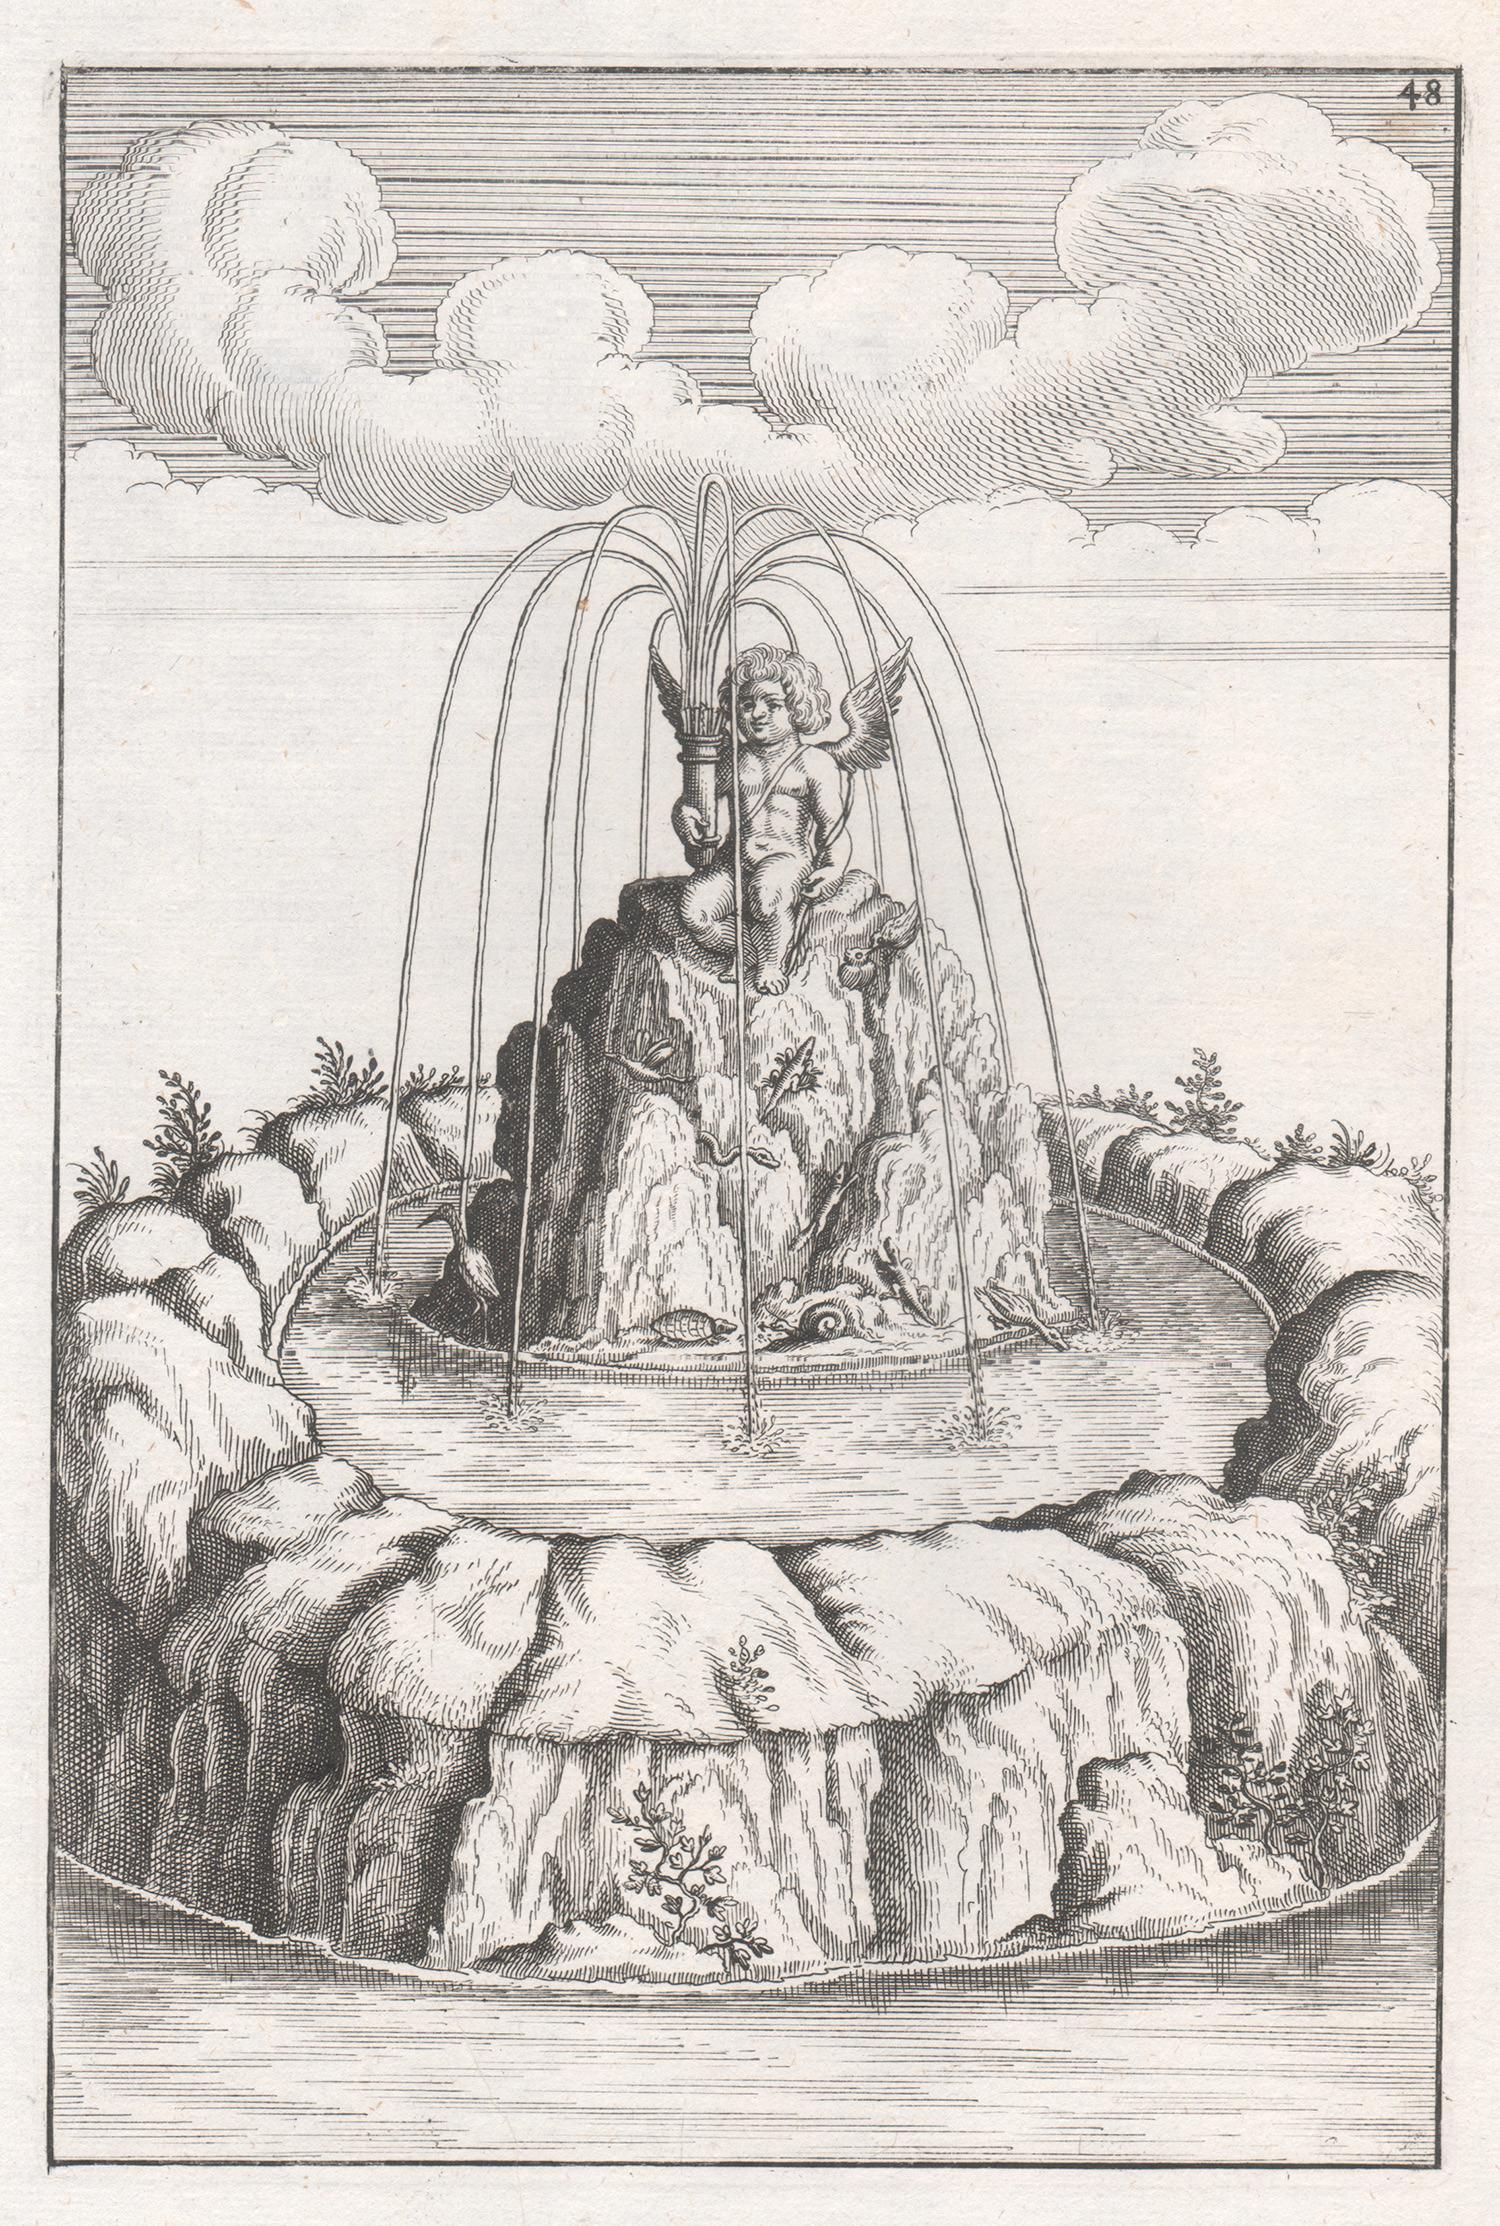 Baroque 17th century German fountain design engraving print by Boeckler